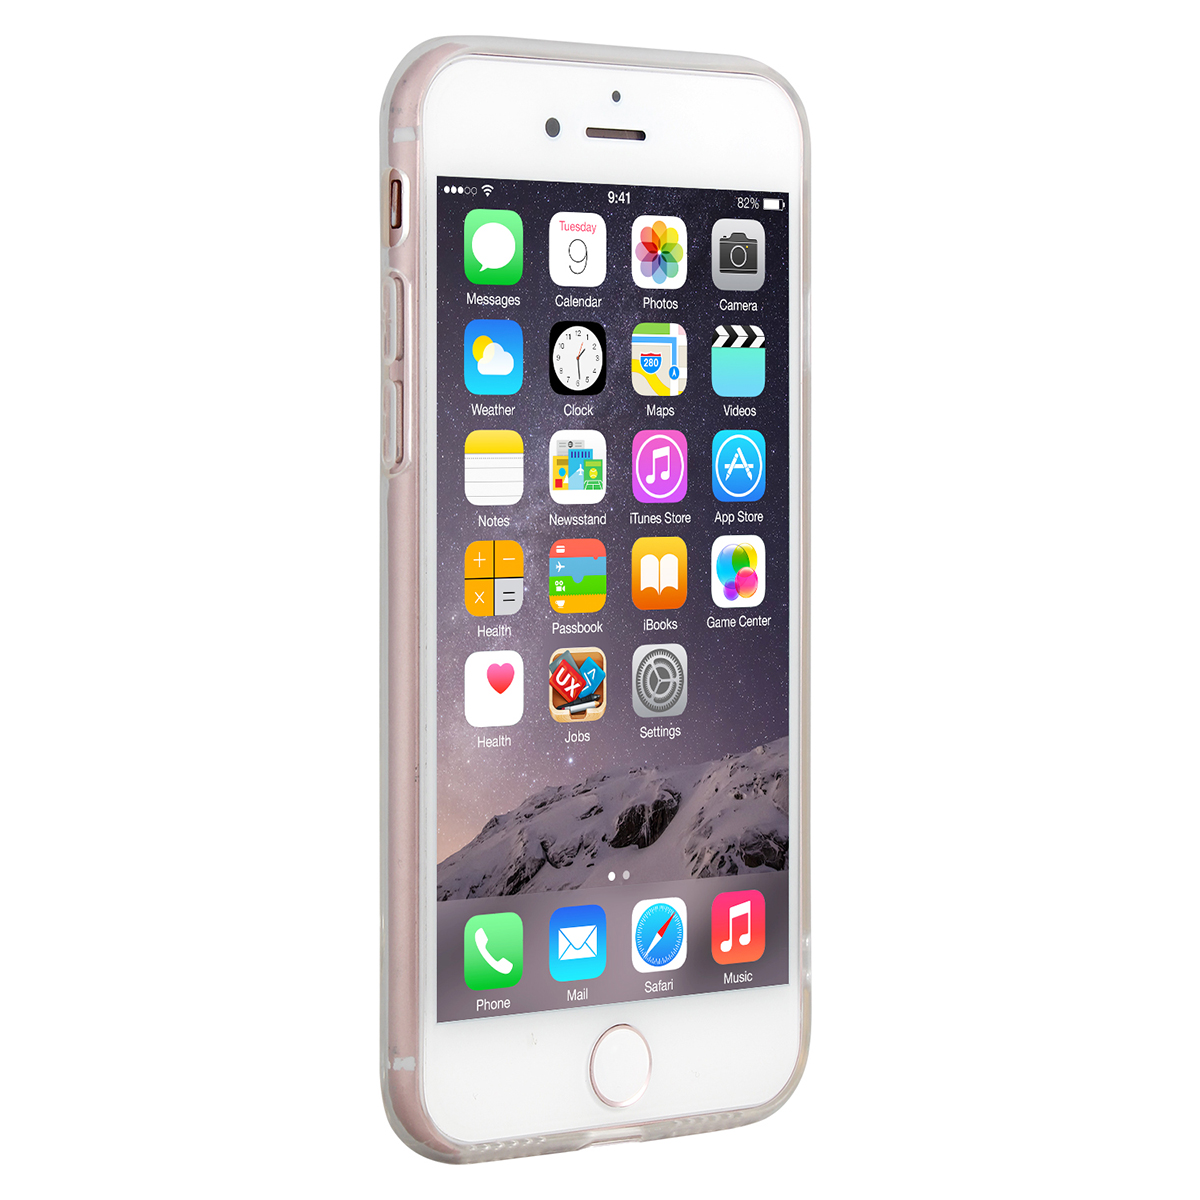 New Slim Soft TPU Transparent Printing Phone Case for iPhone 7 - Drink Tea Unicorn